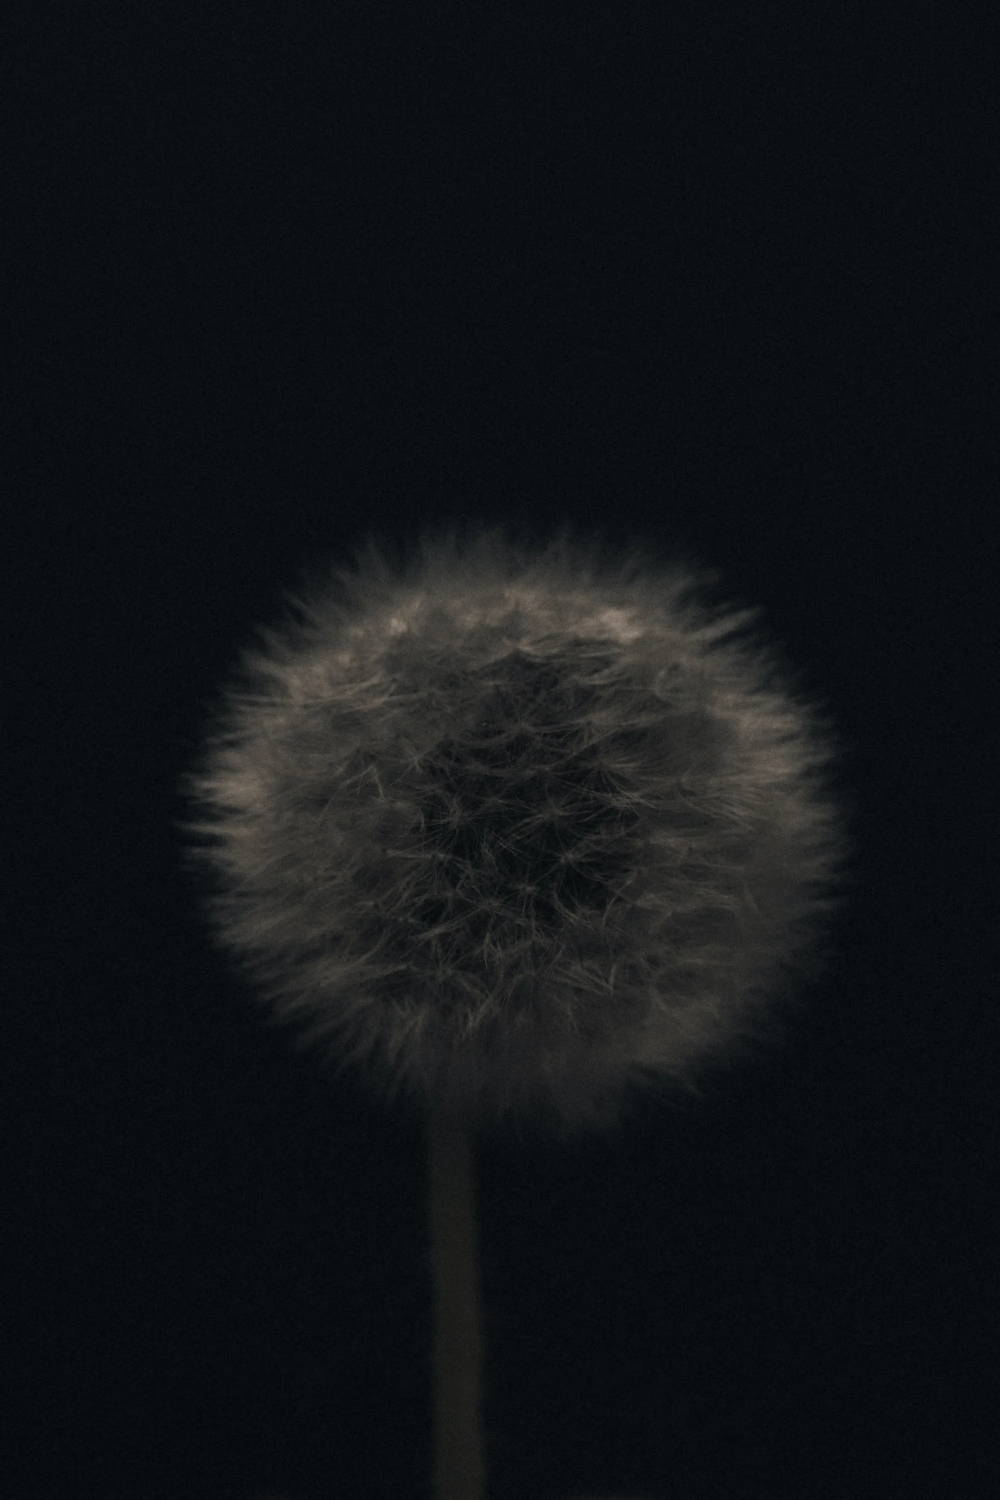 Fluffy white dandelion against a black background